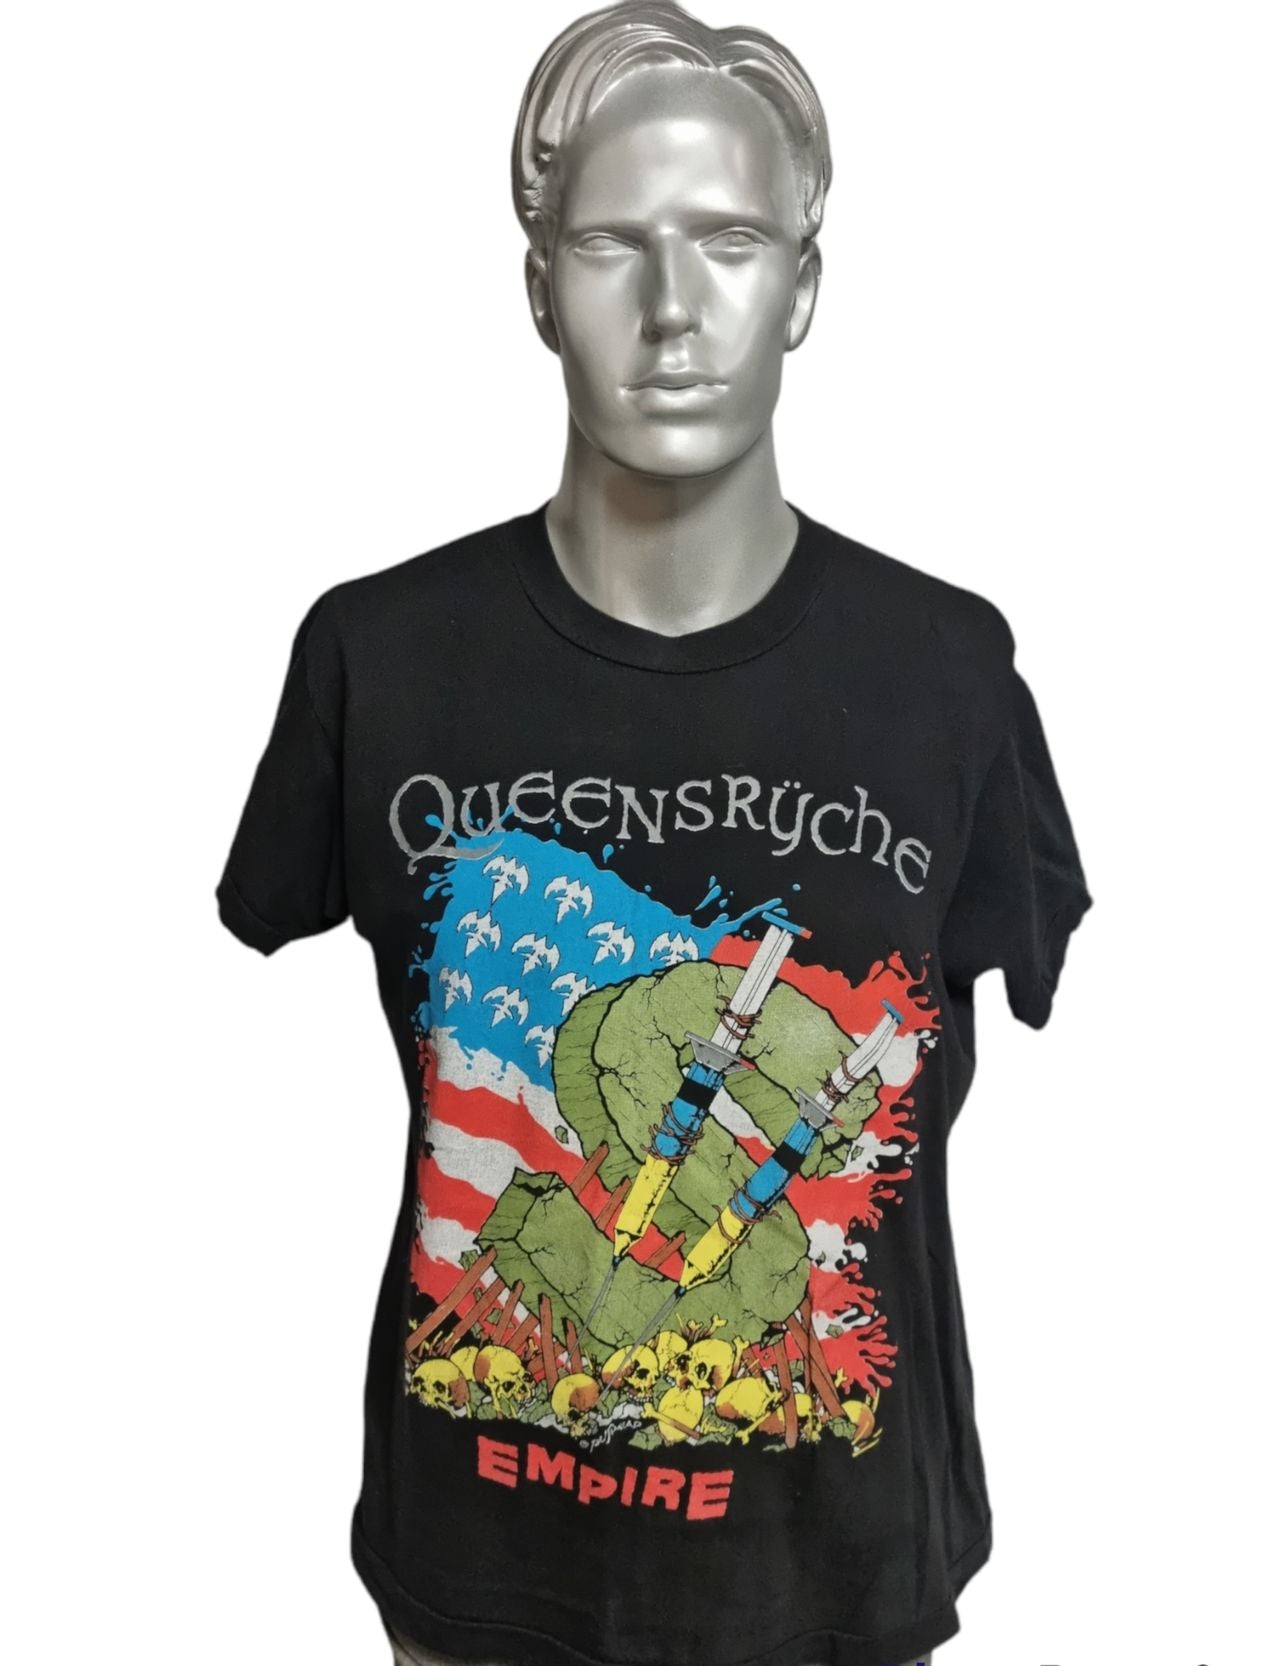 Queensryche Building Empires world Tour. UK t-shirt